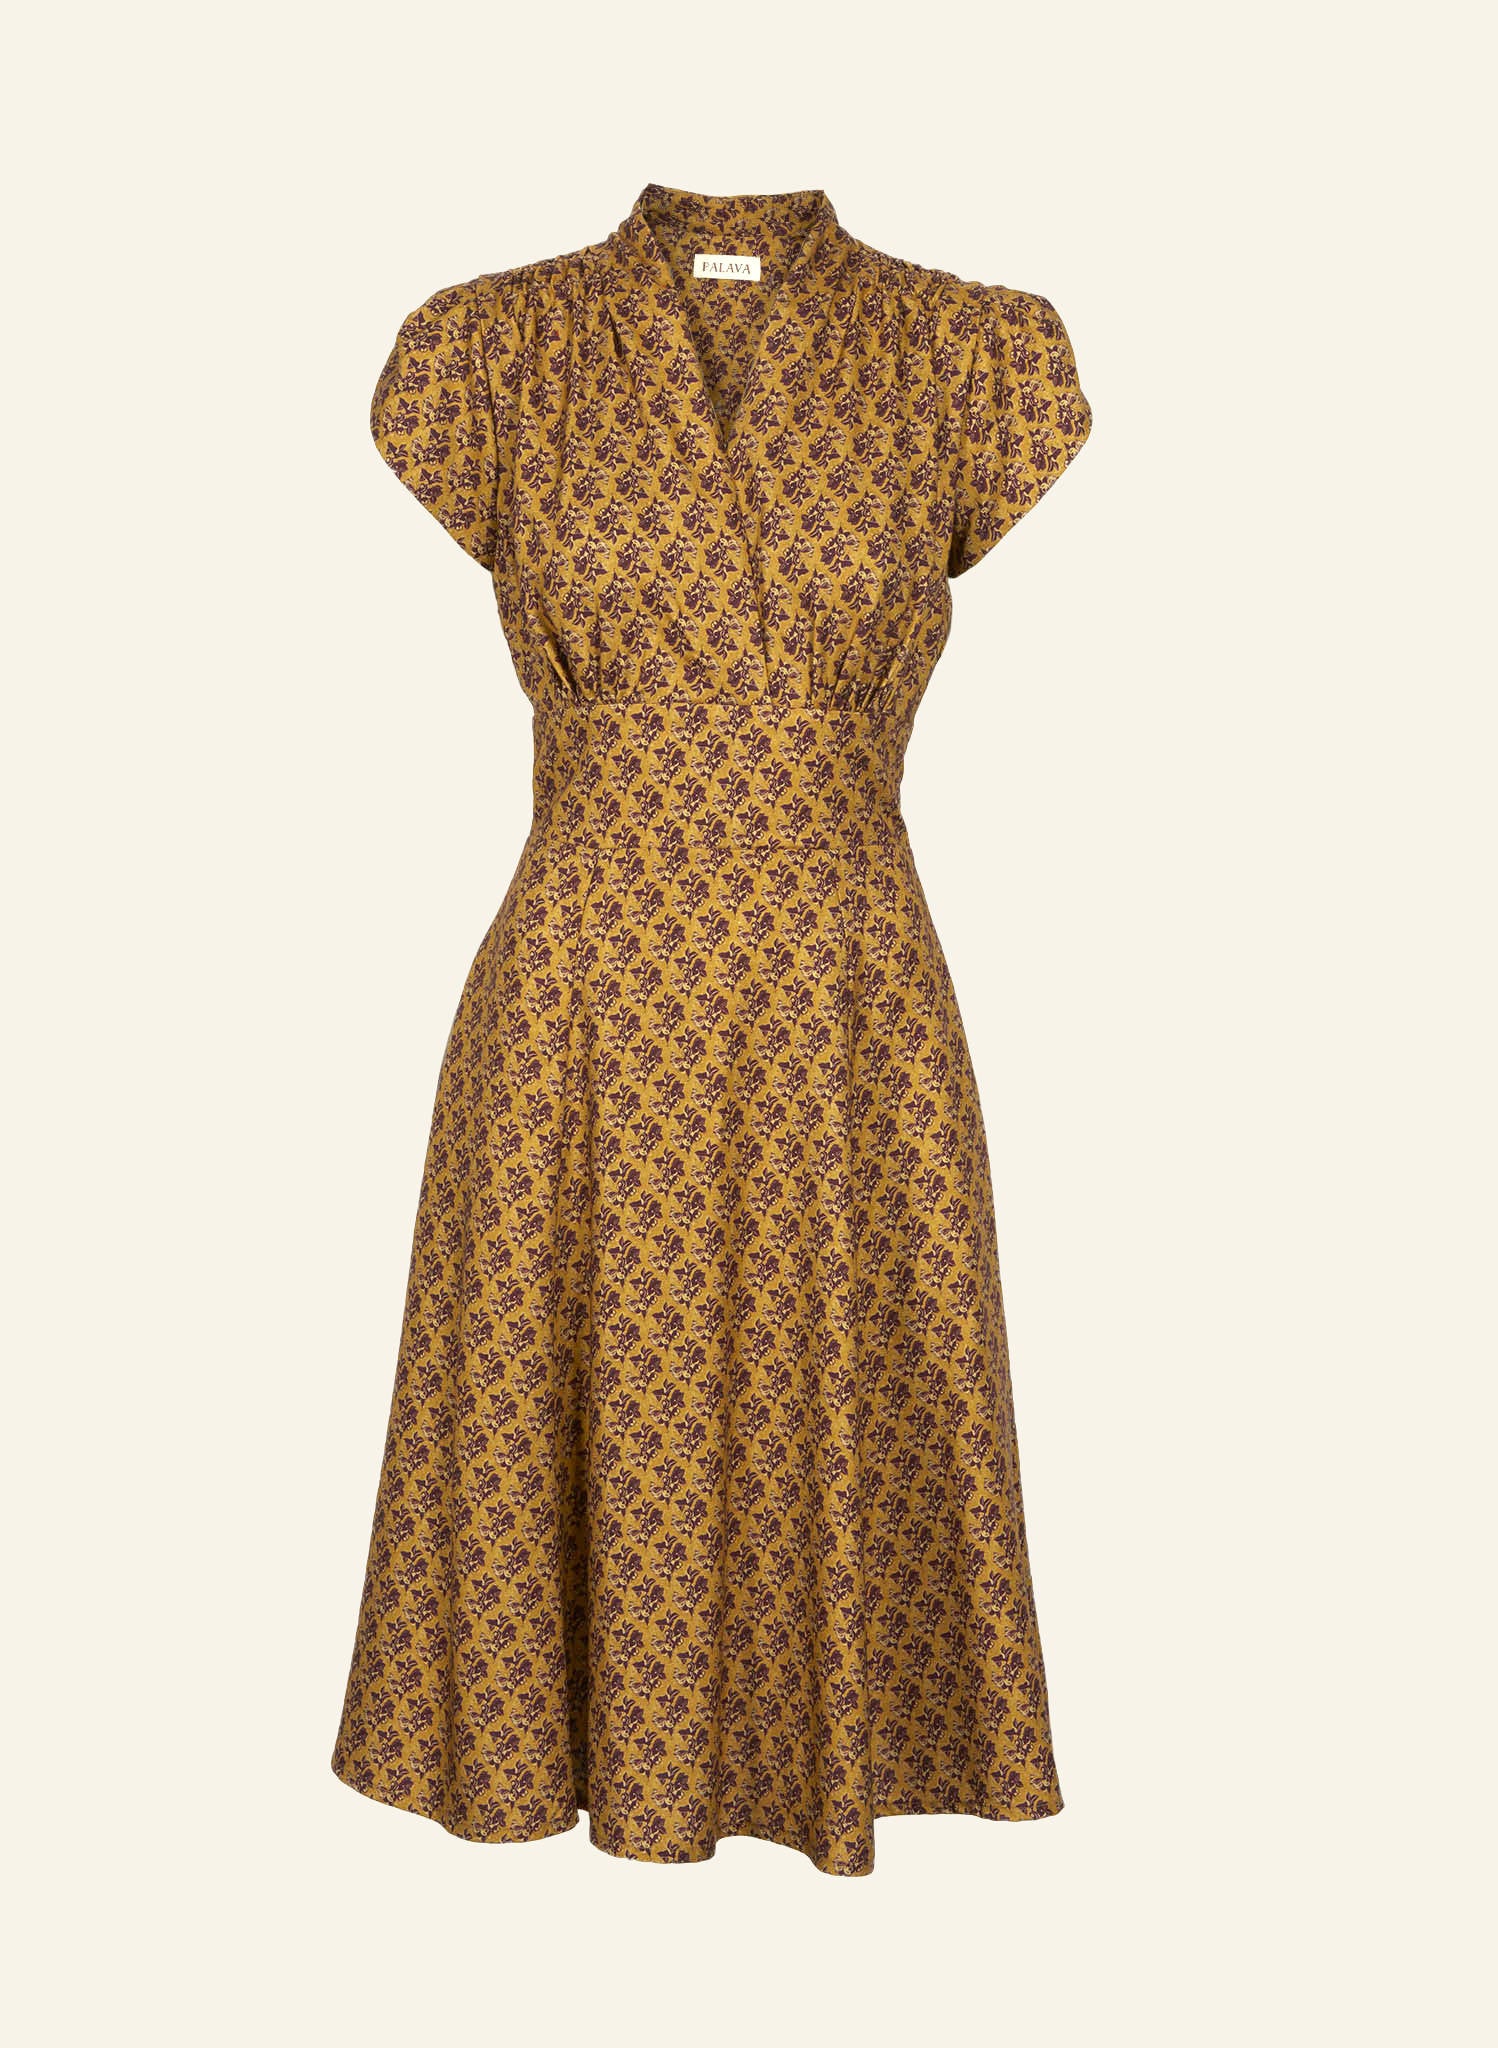 Rita - Gold Sloes Dress